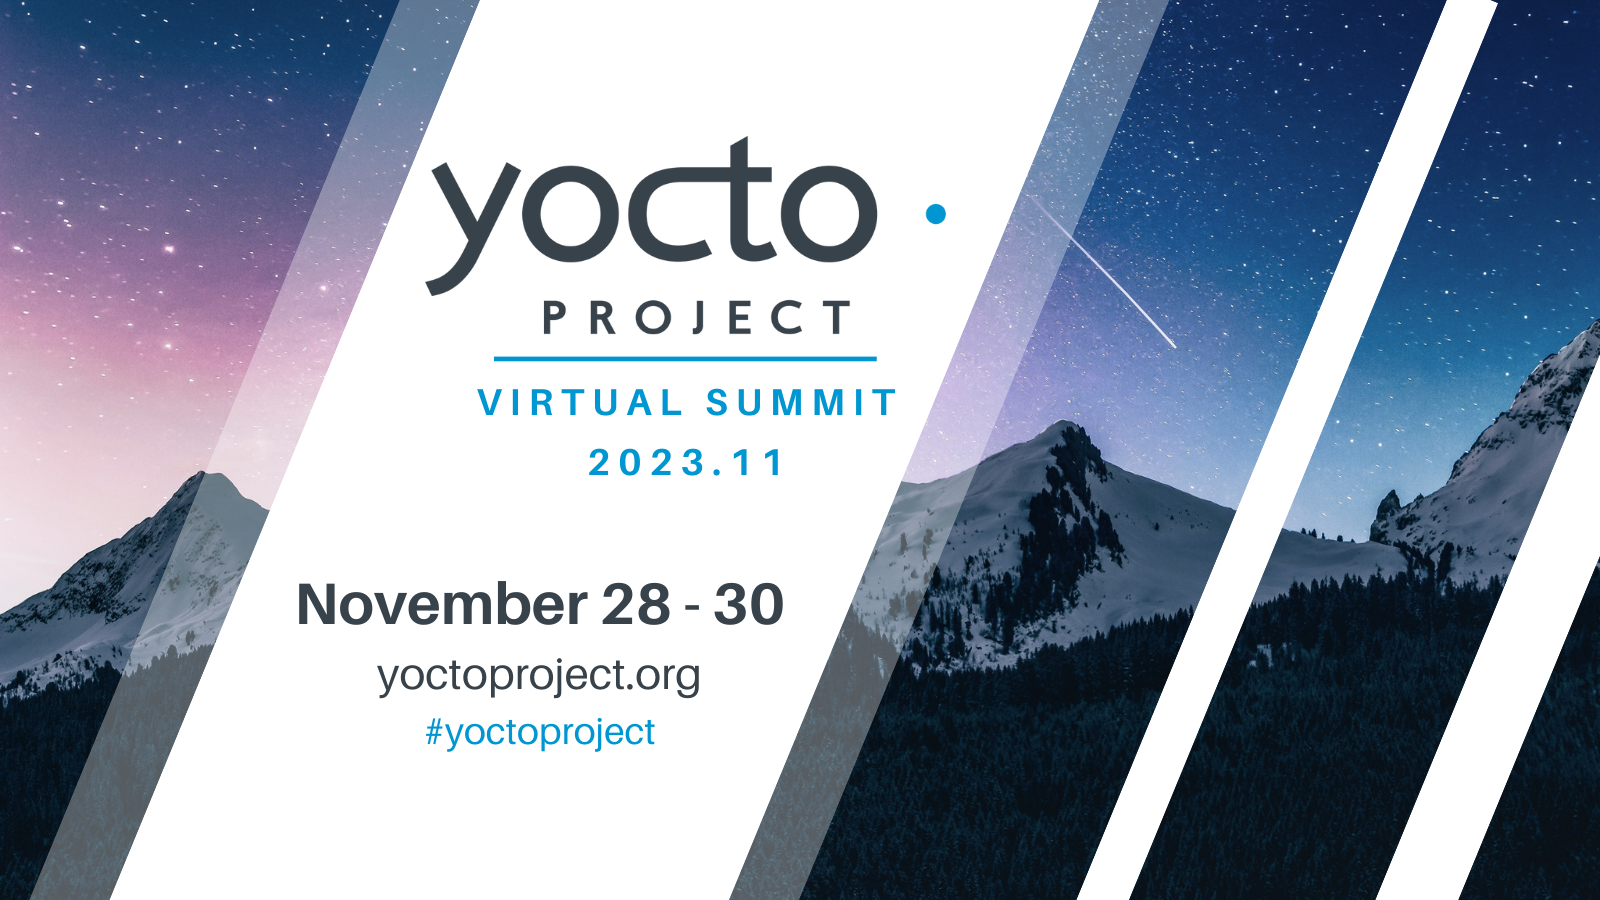 Imagem do Yocto Project Virtual Summit 2023.11